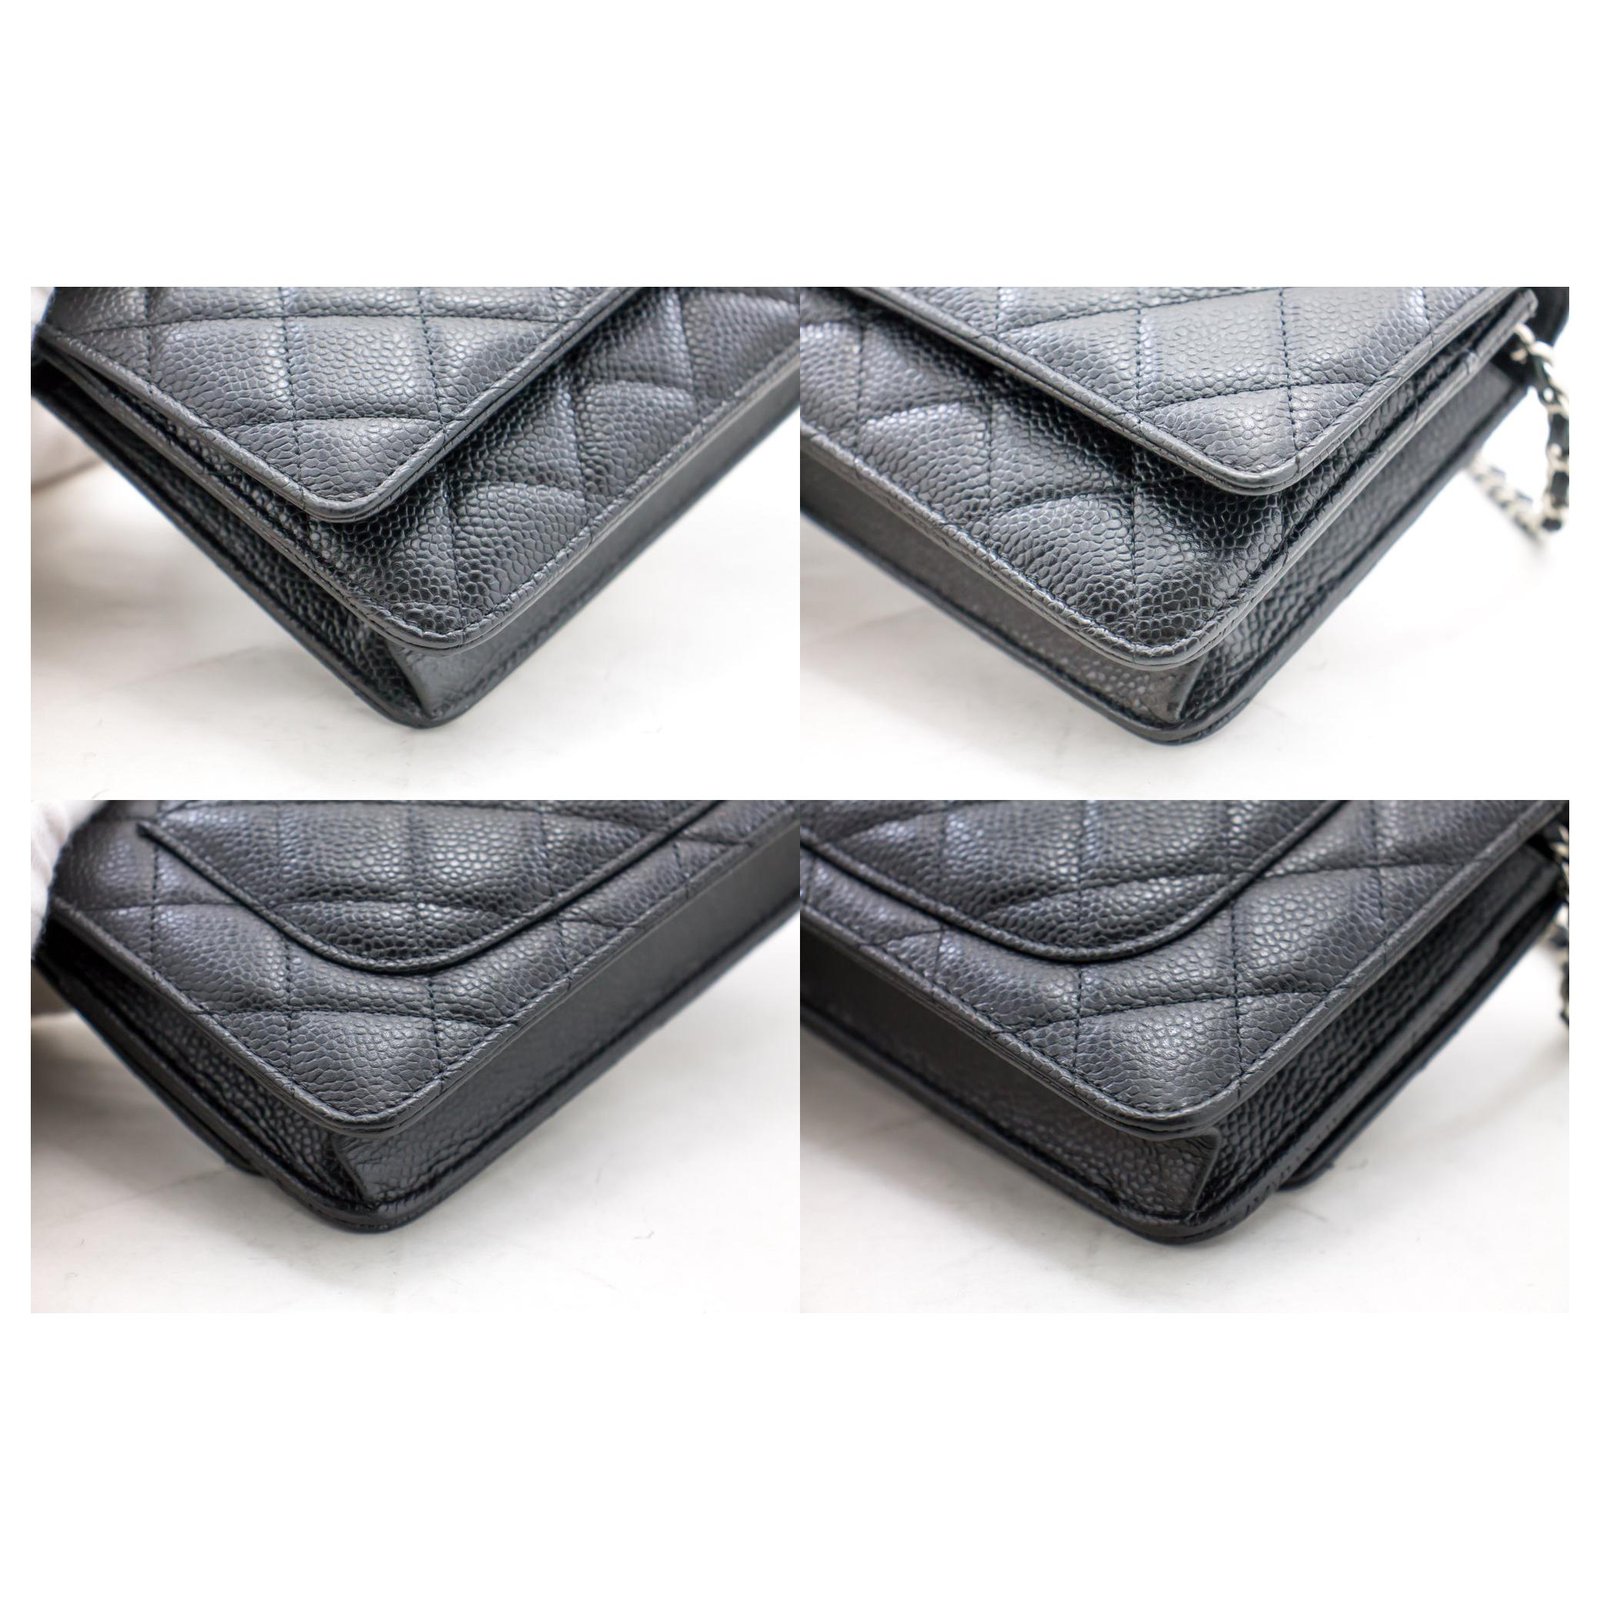 CHANEL Caviar Wallet On Chain WOC Black Shoulder Bag Crossbody k38 –  hannari-shop